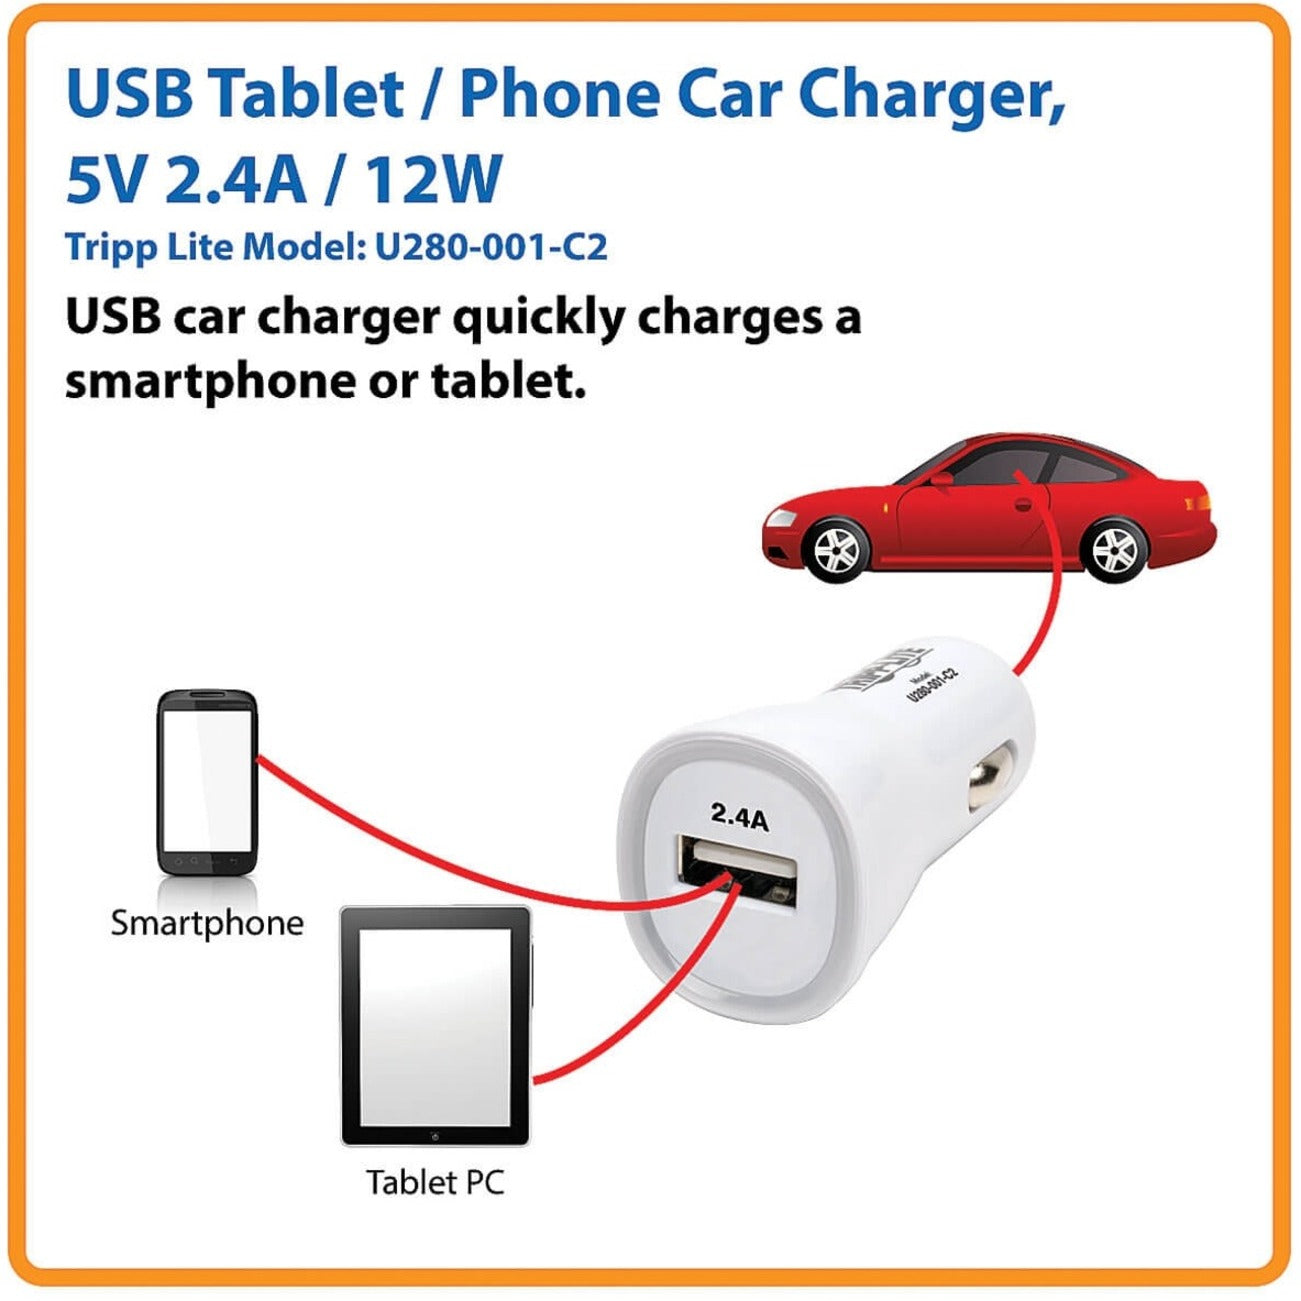 Tripp Lite U280-001-C2 USB Tablet / Phone Car Charger, 5V / 2.4A